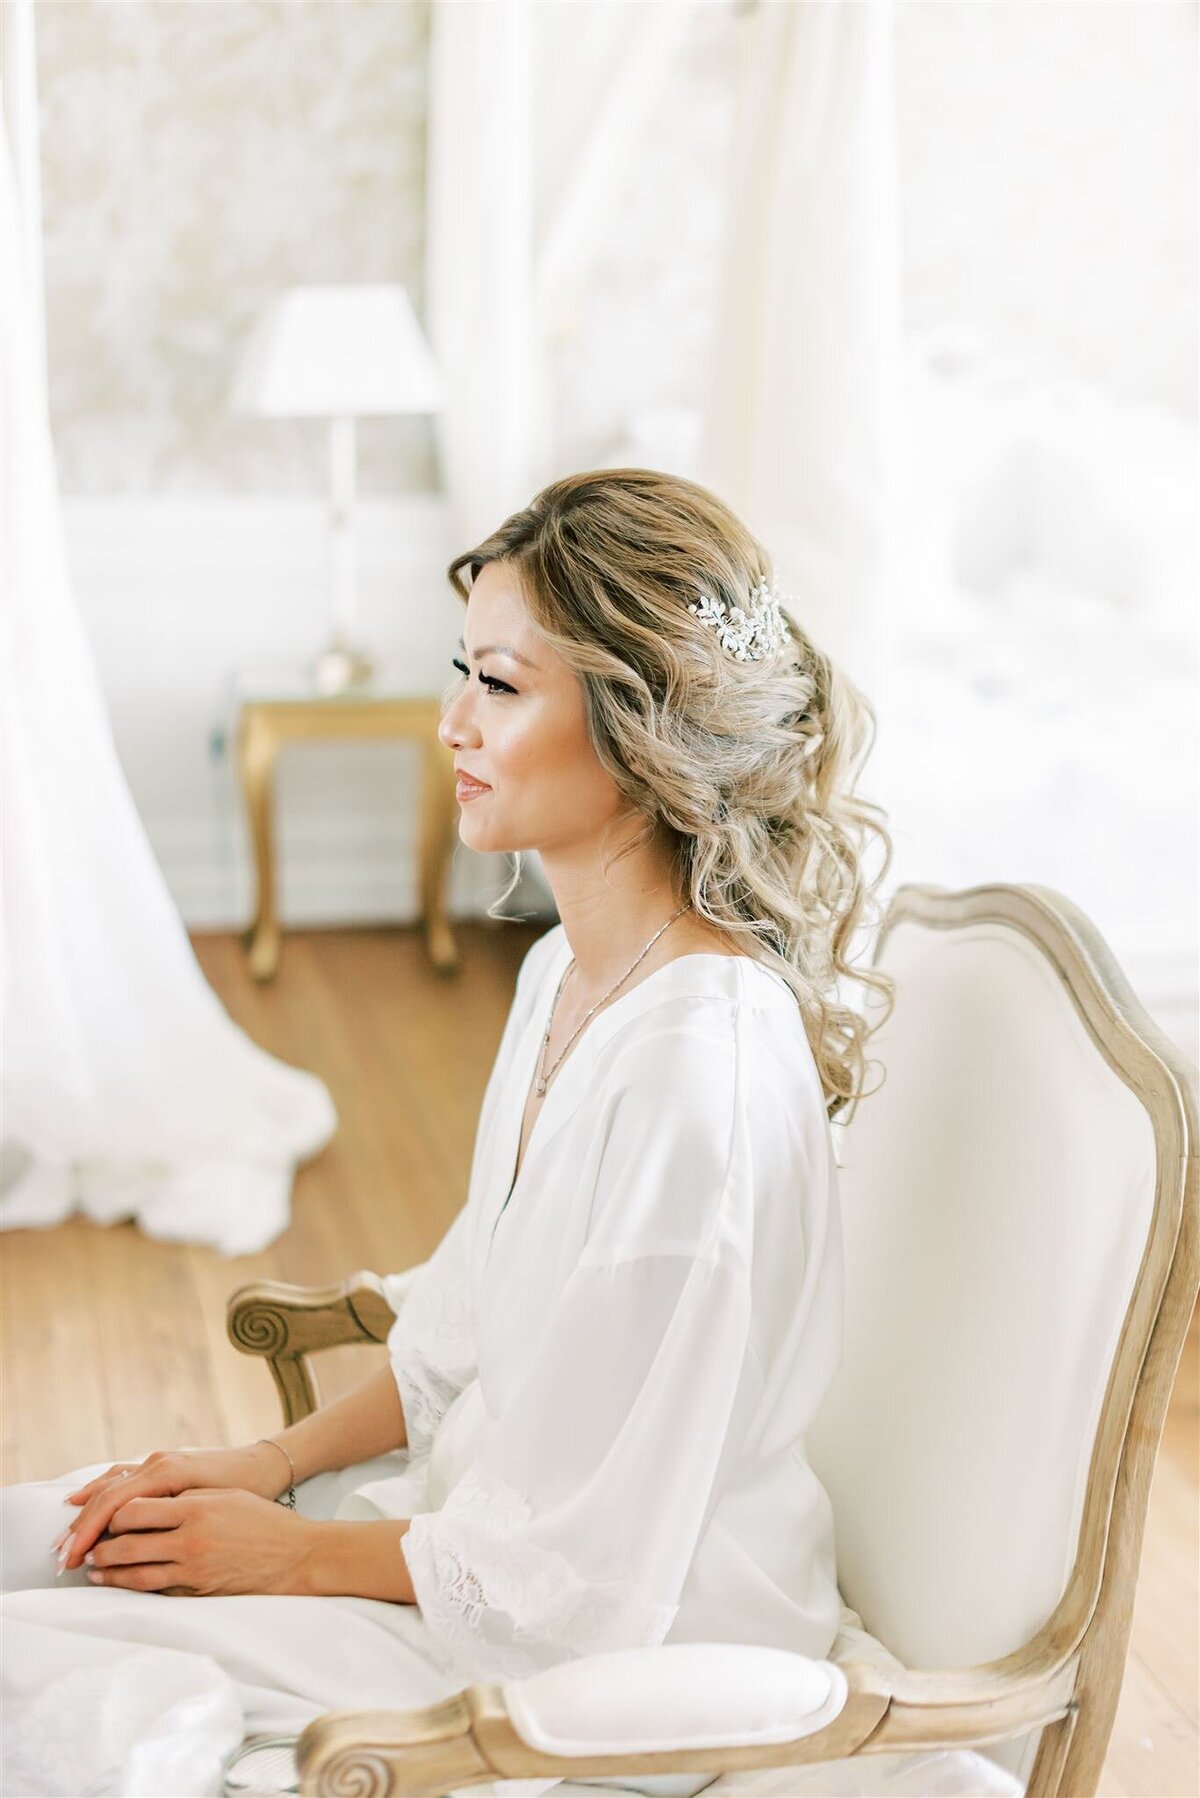 Wedding Photographer Anna Lundgren - helloalora_Rånäs Slott chateau wedding in Sweden bridal preparations in the suite